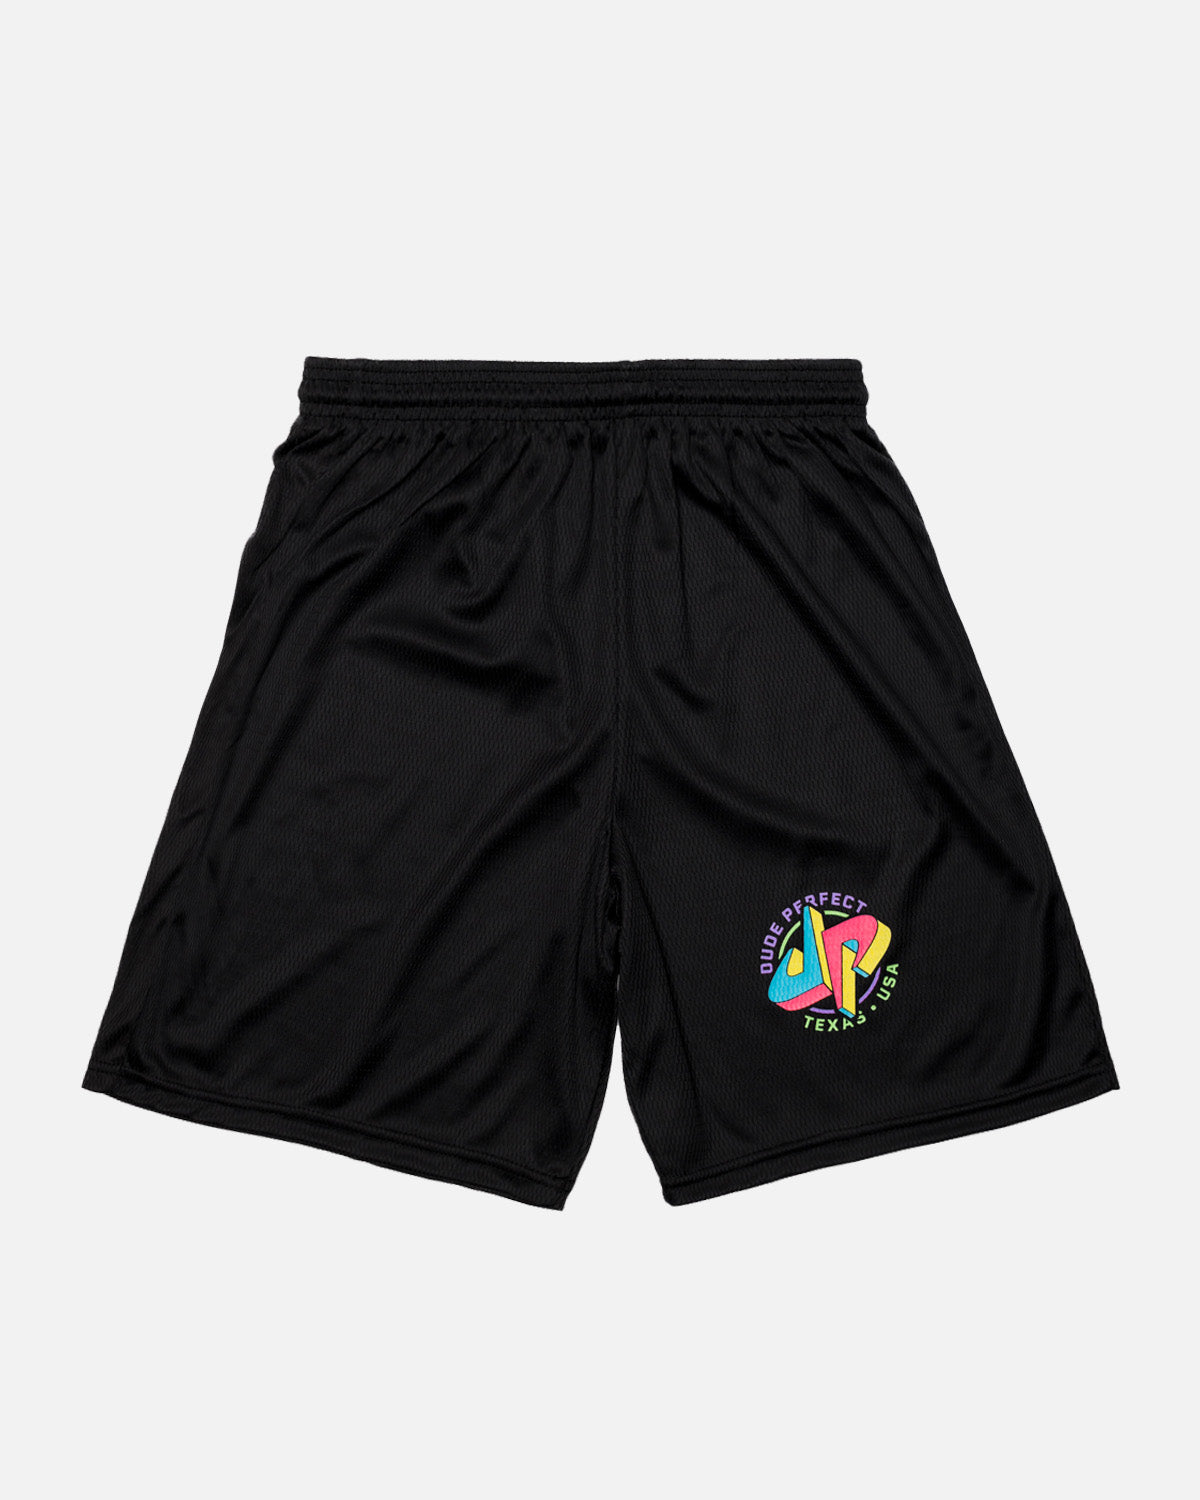 Dude Pacific Mesh Shorts (Black)